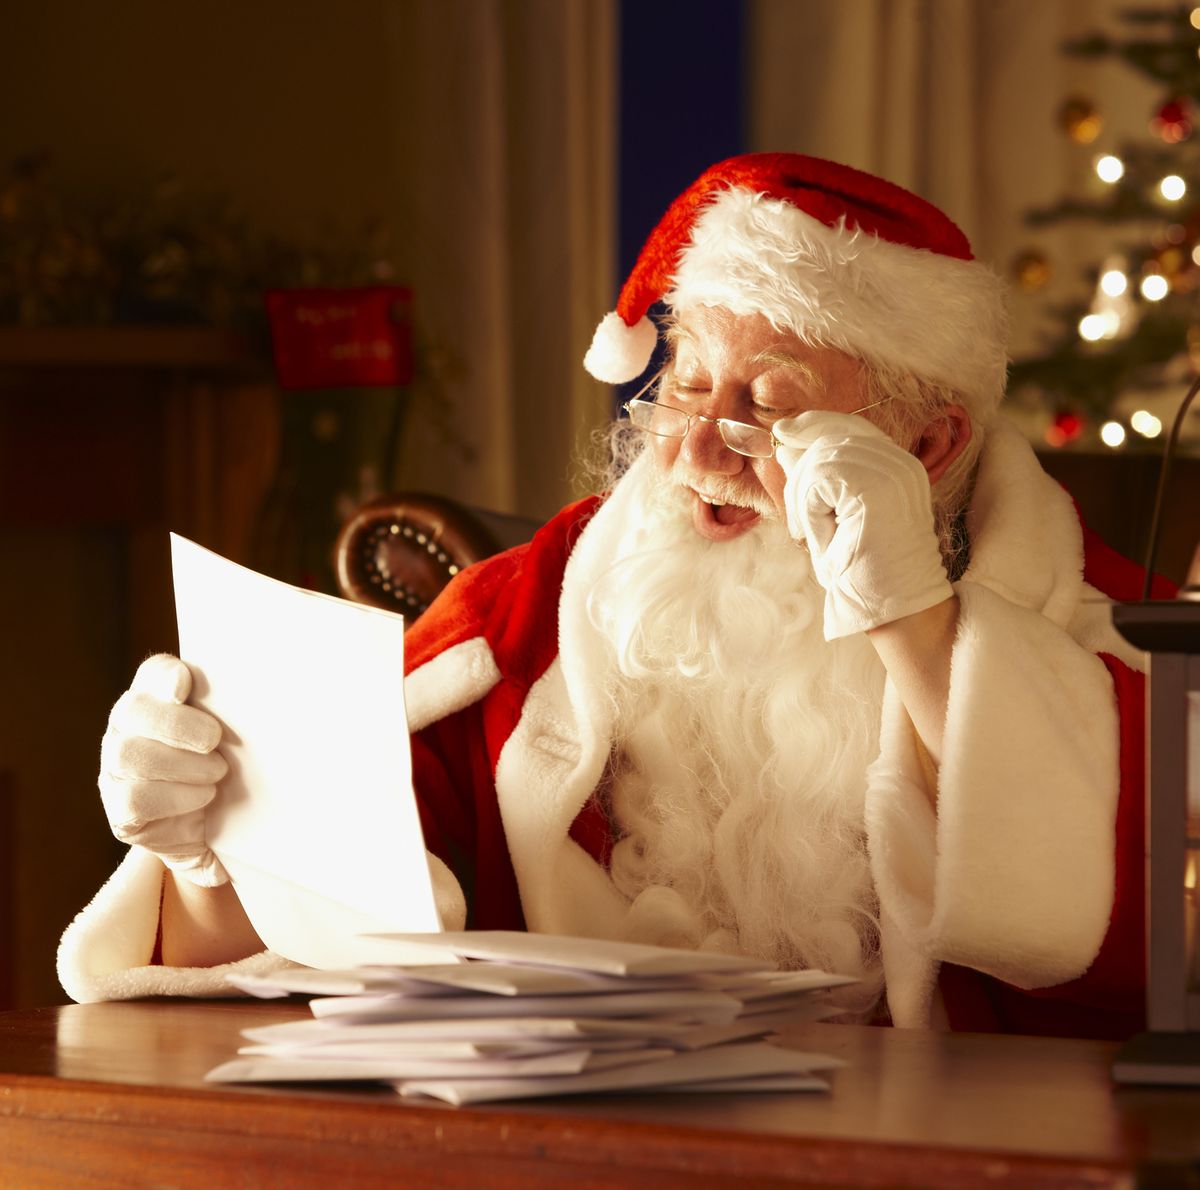 35 Funny Santa Jokes - Best Jokes About Santa for Christmas